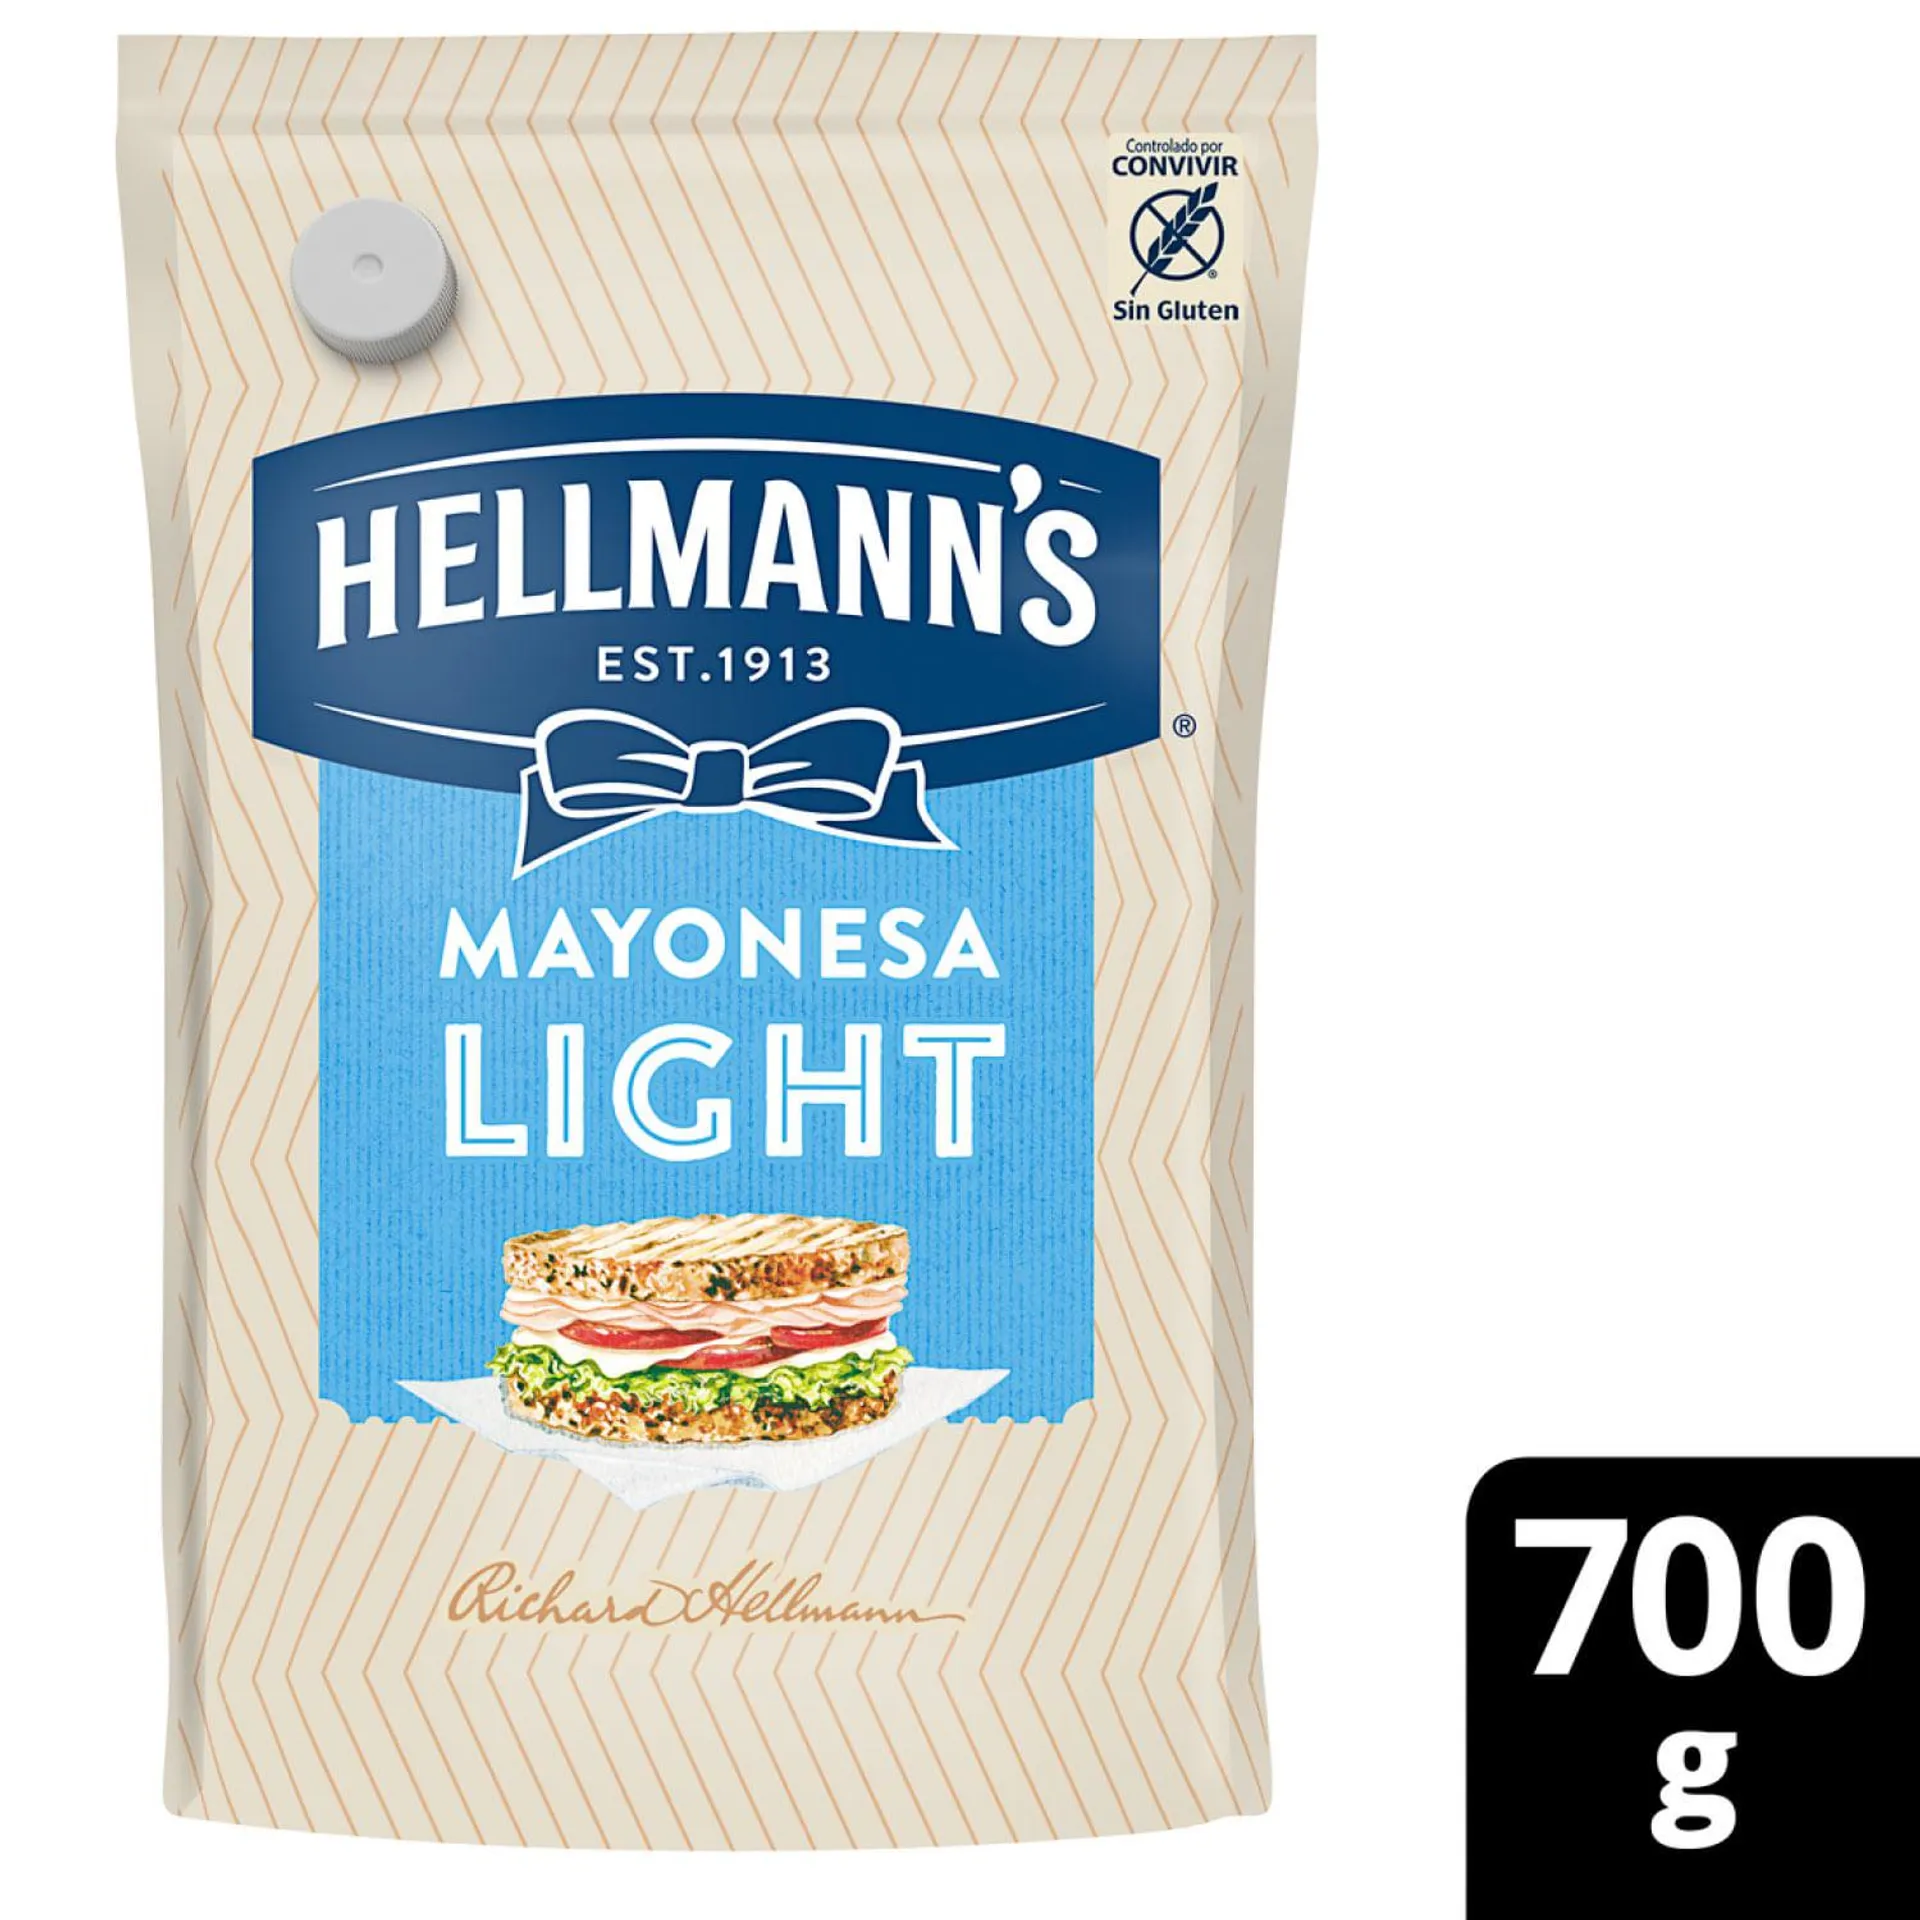 Mayonesa light 700 g